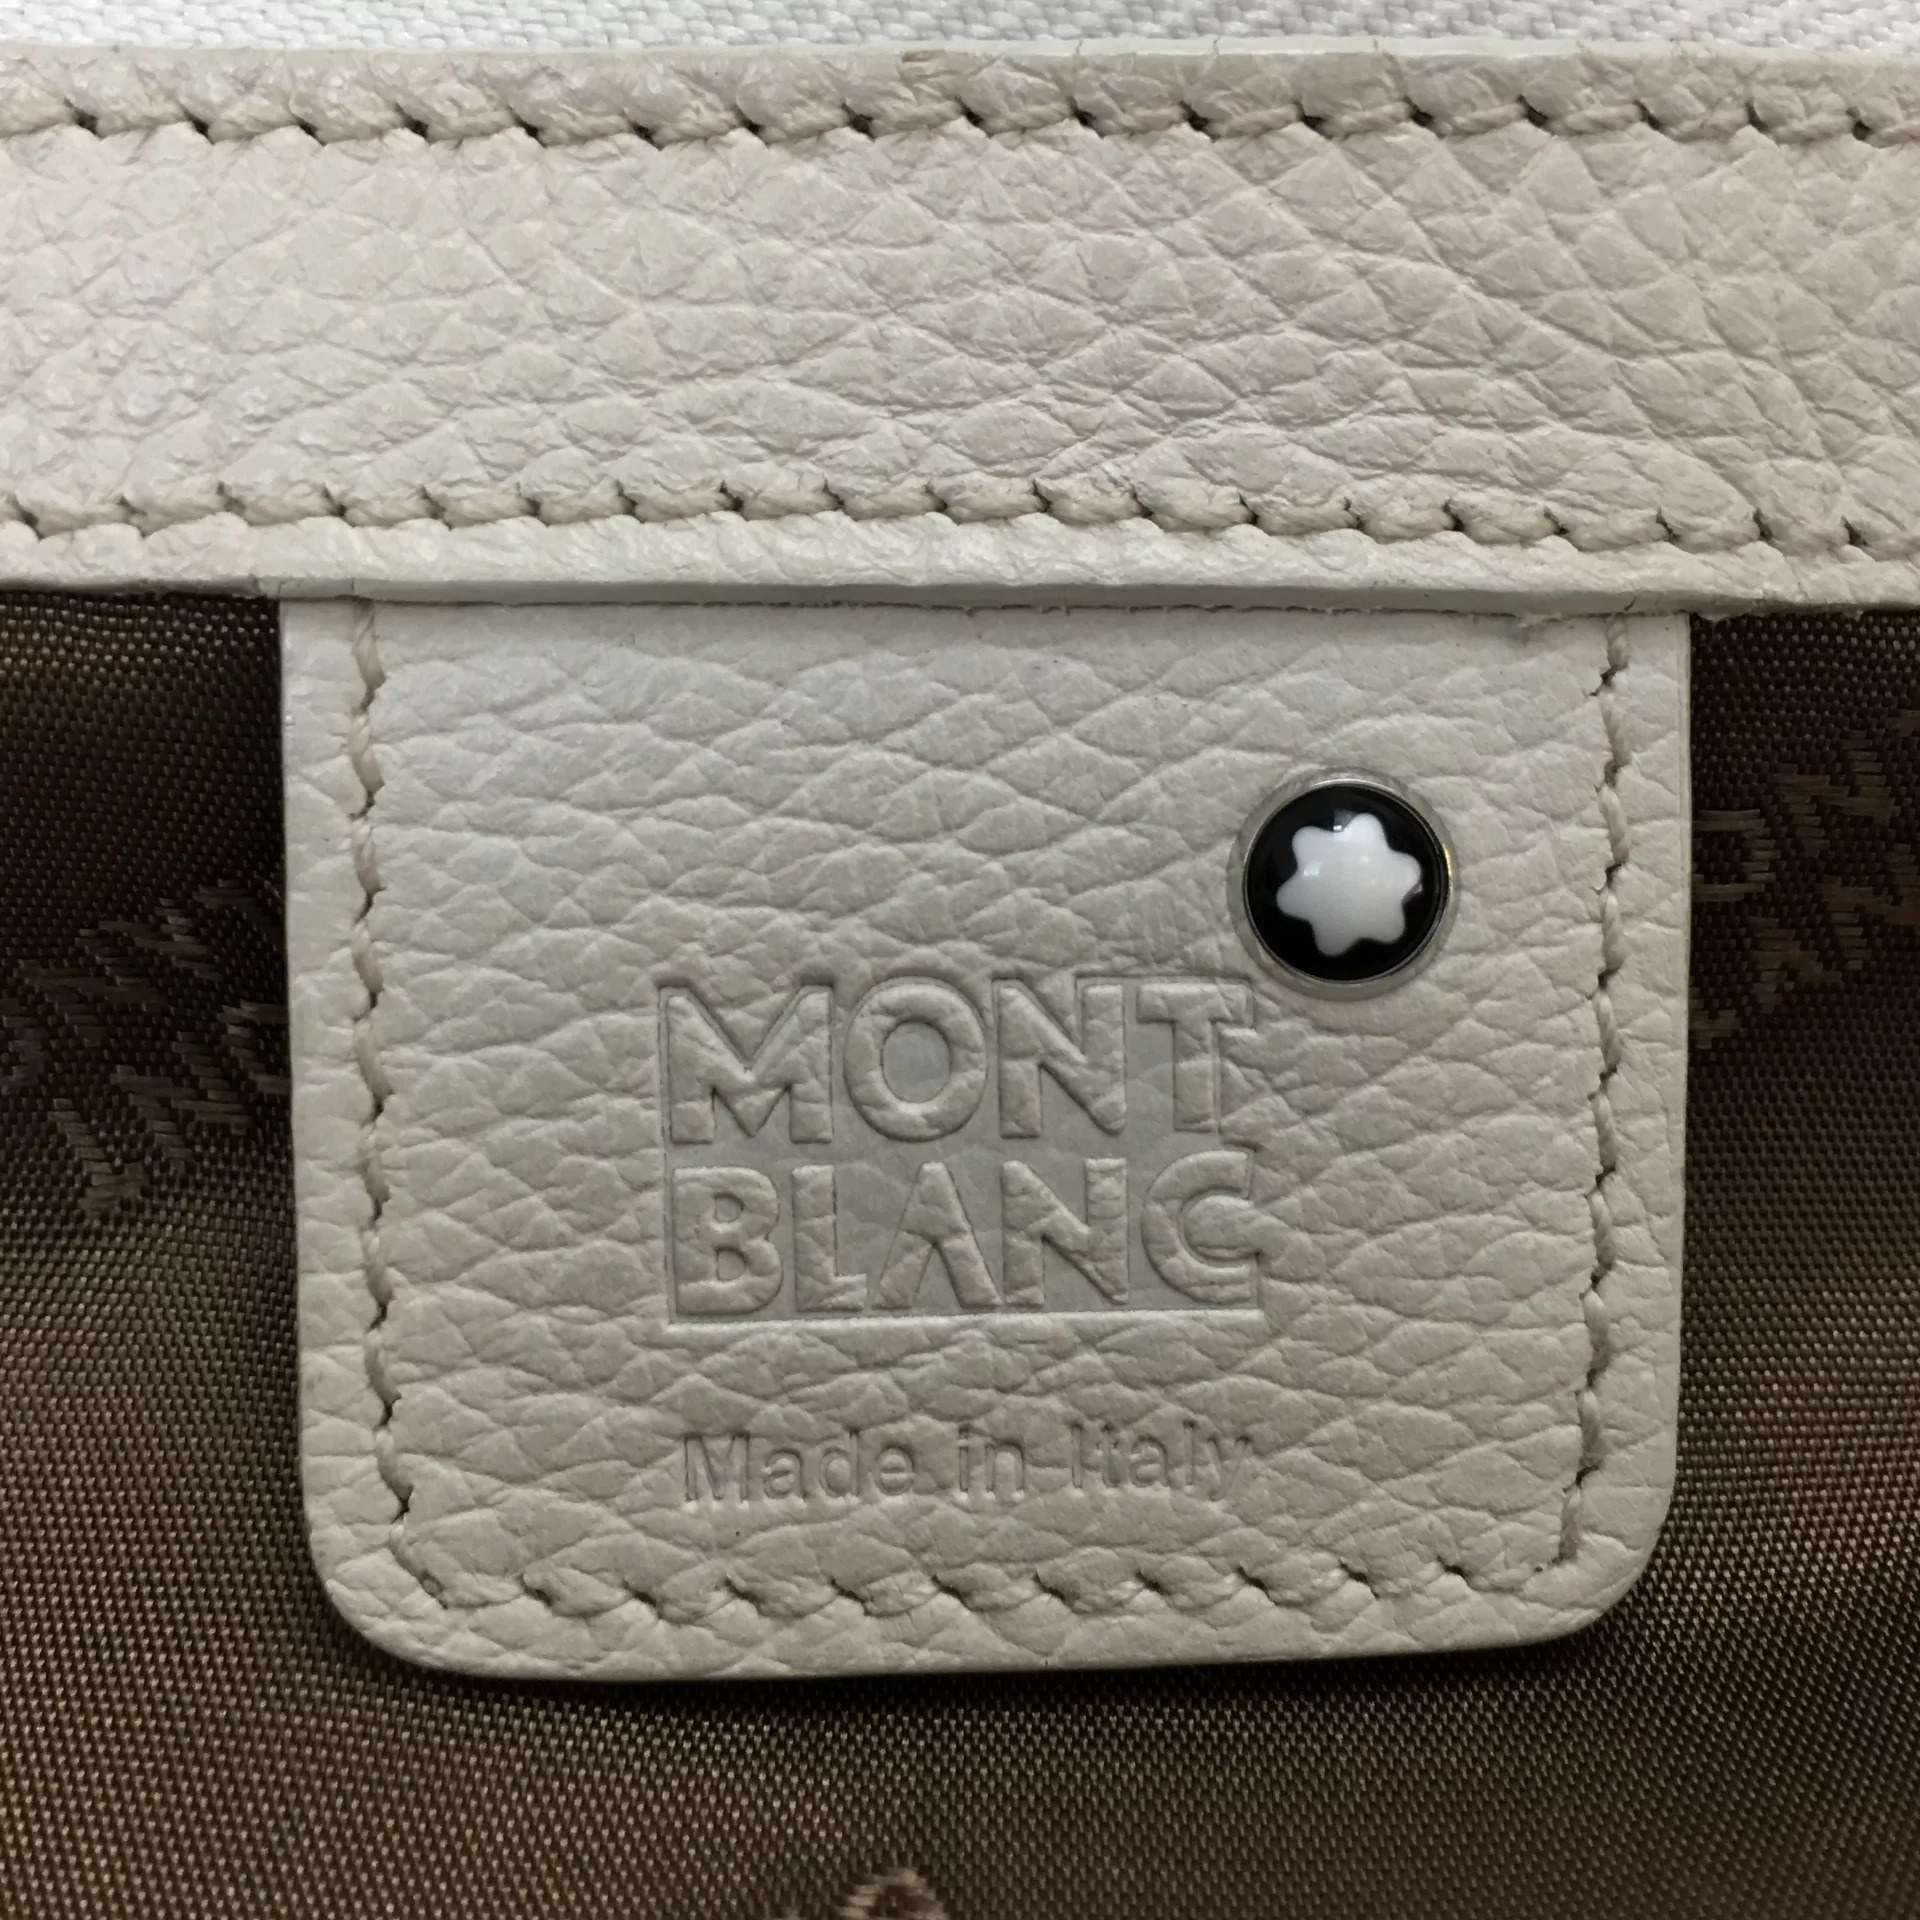 Bolsa Montblanc Couro Branco